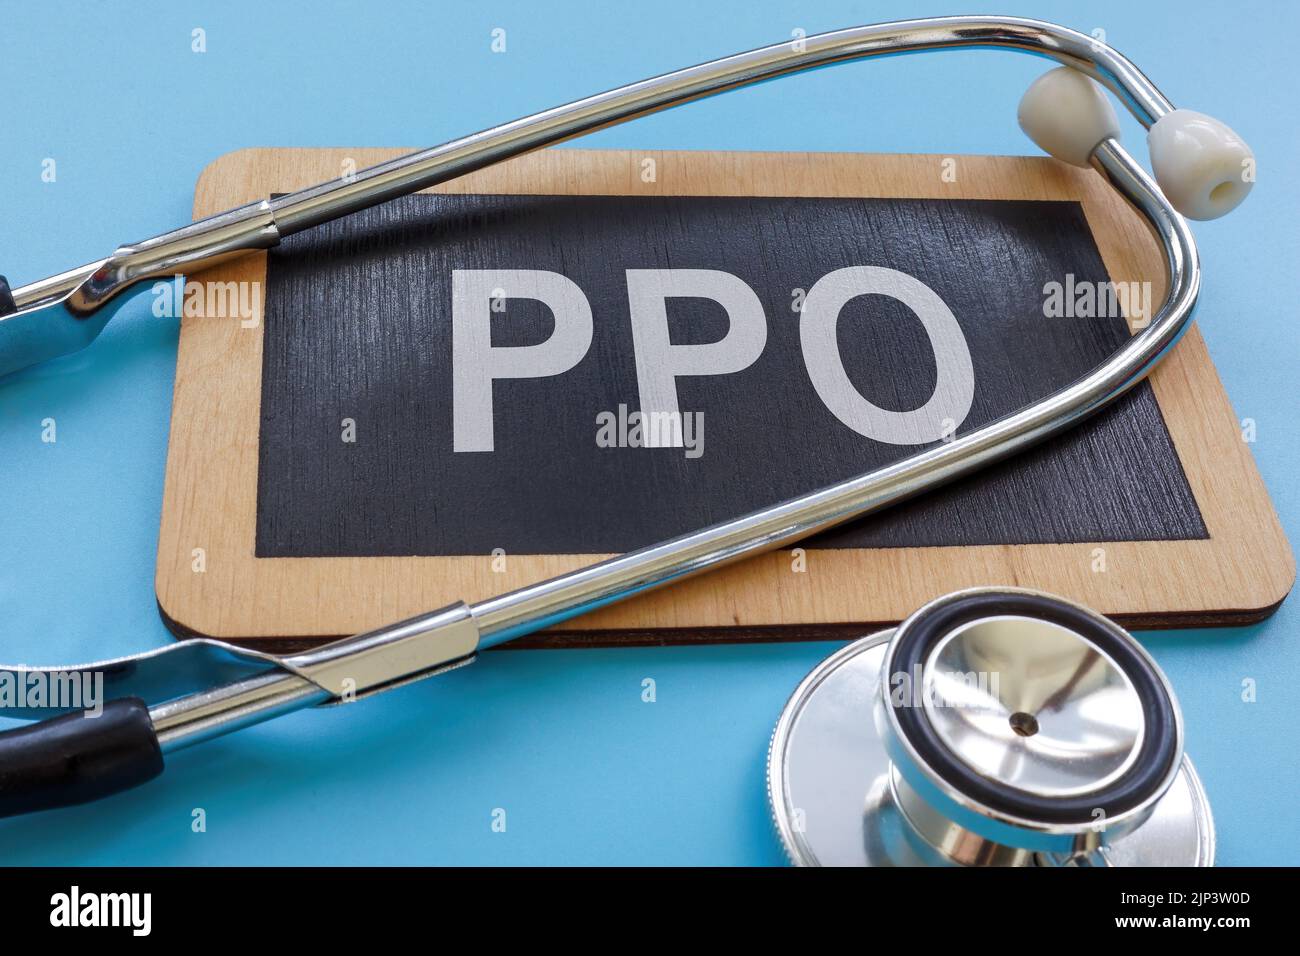 Plate with abbreviation PPO preferred provider organization or health insurance plan. Stock Photo